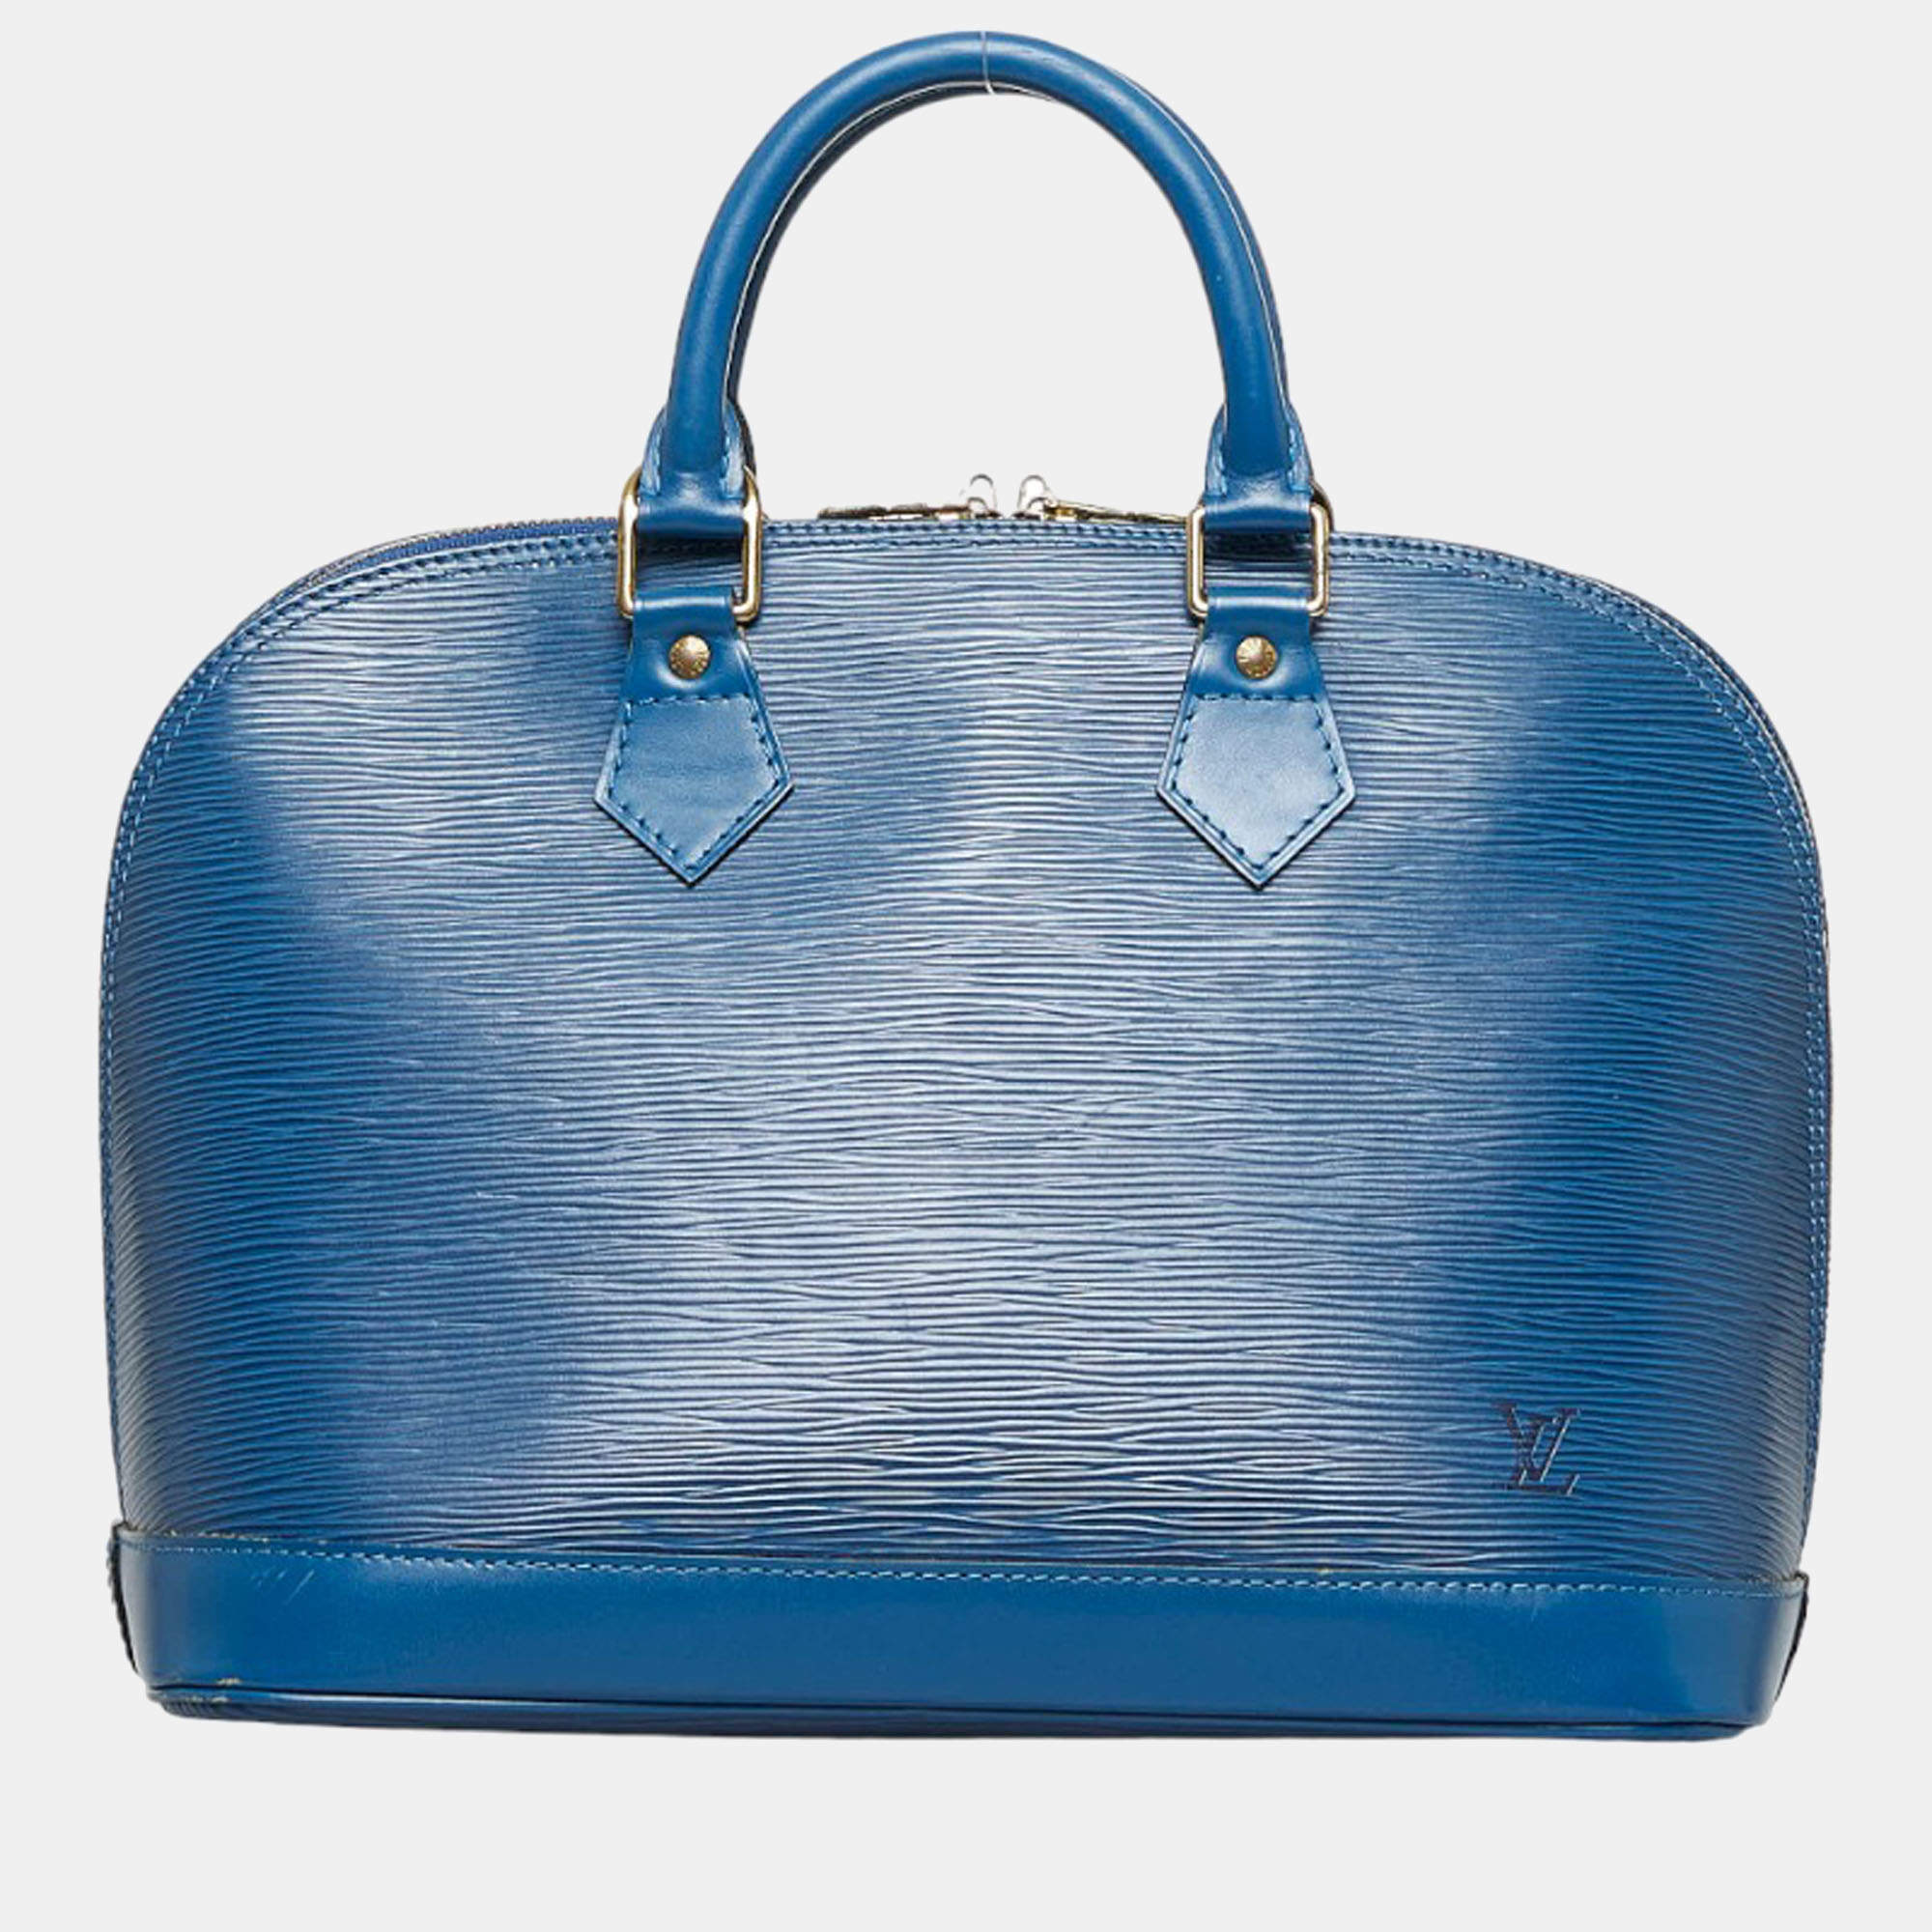 Louis Vuitton Blue Handbags